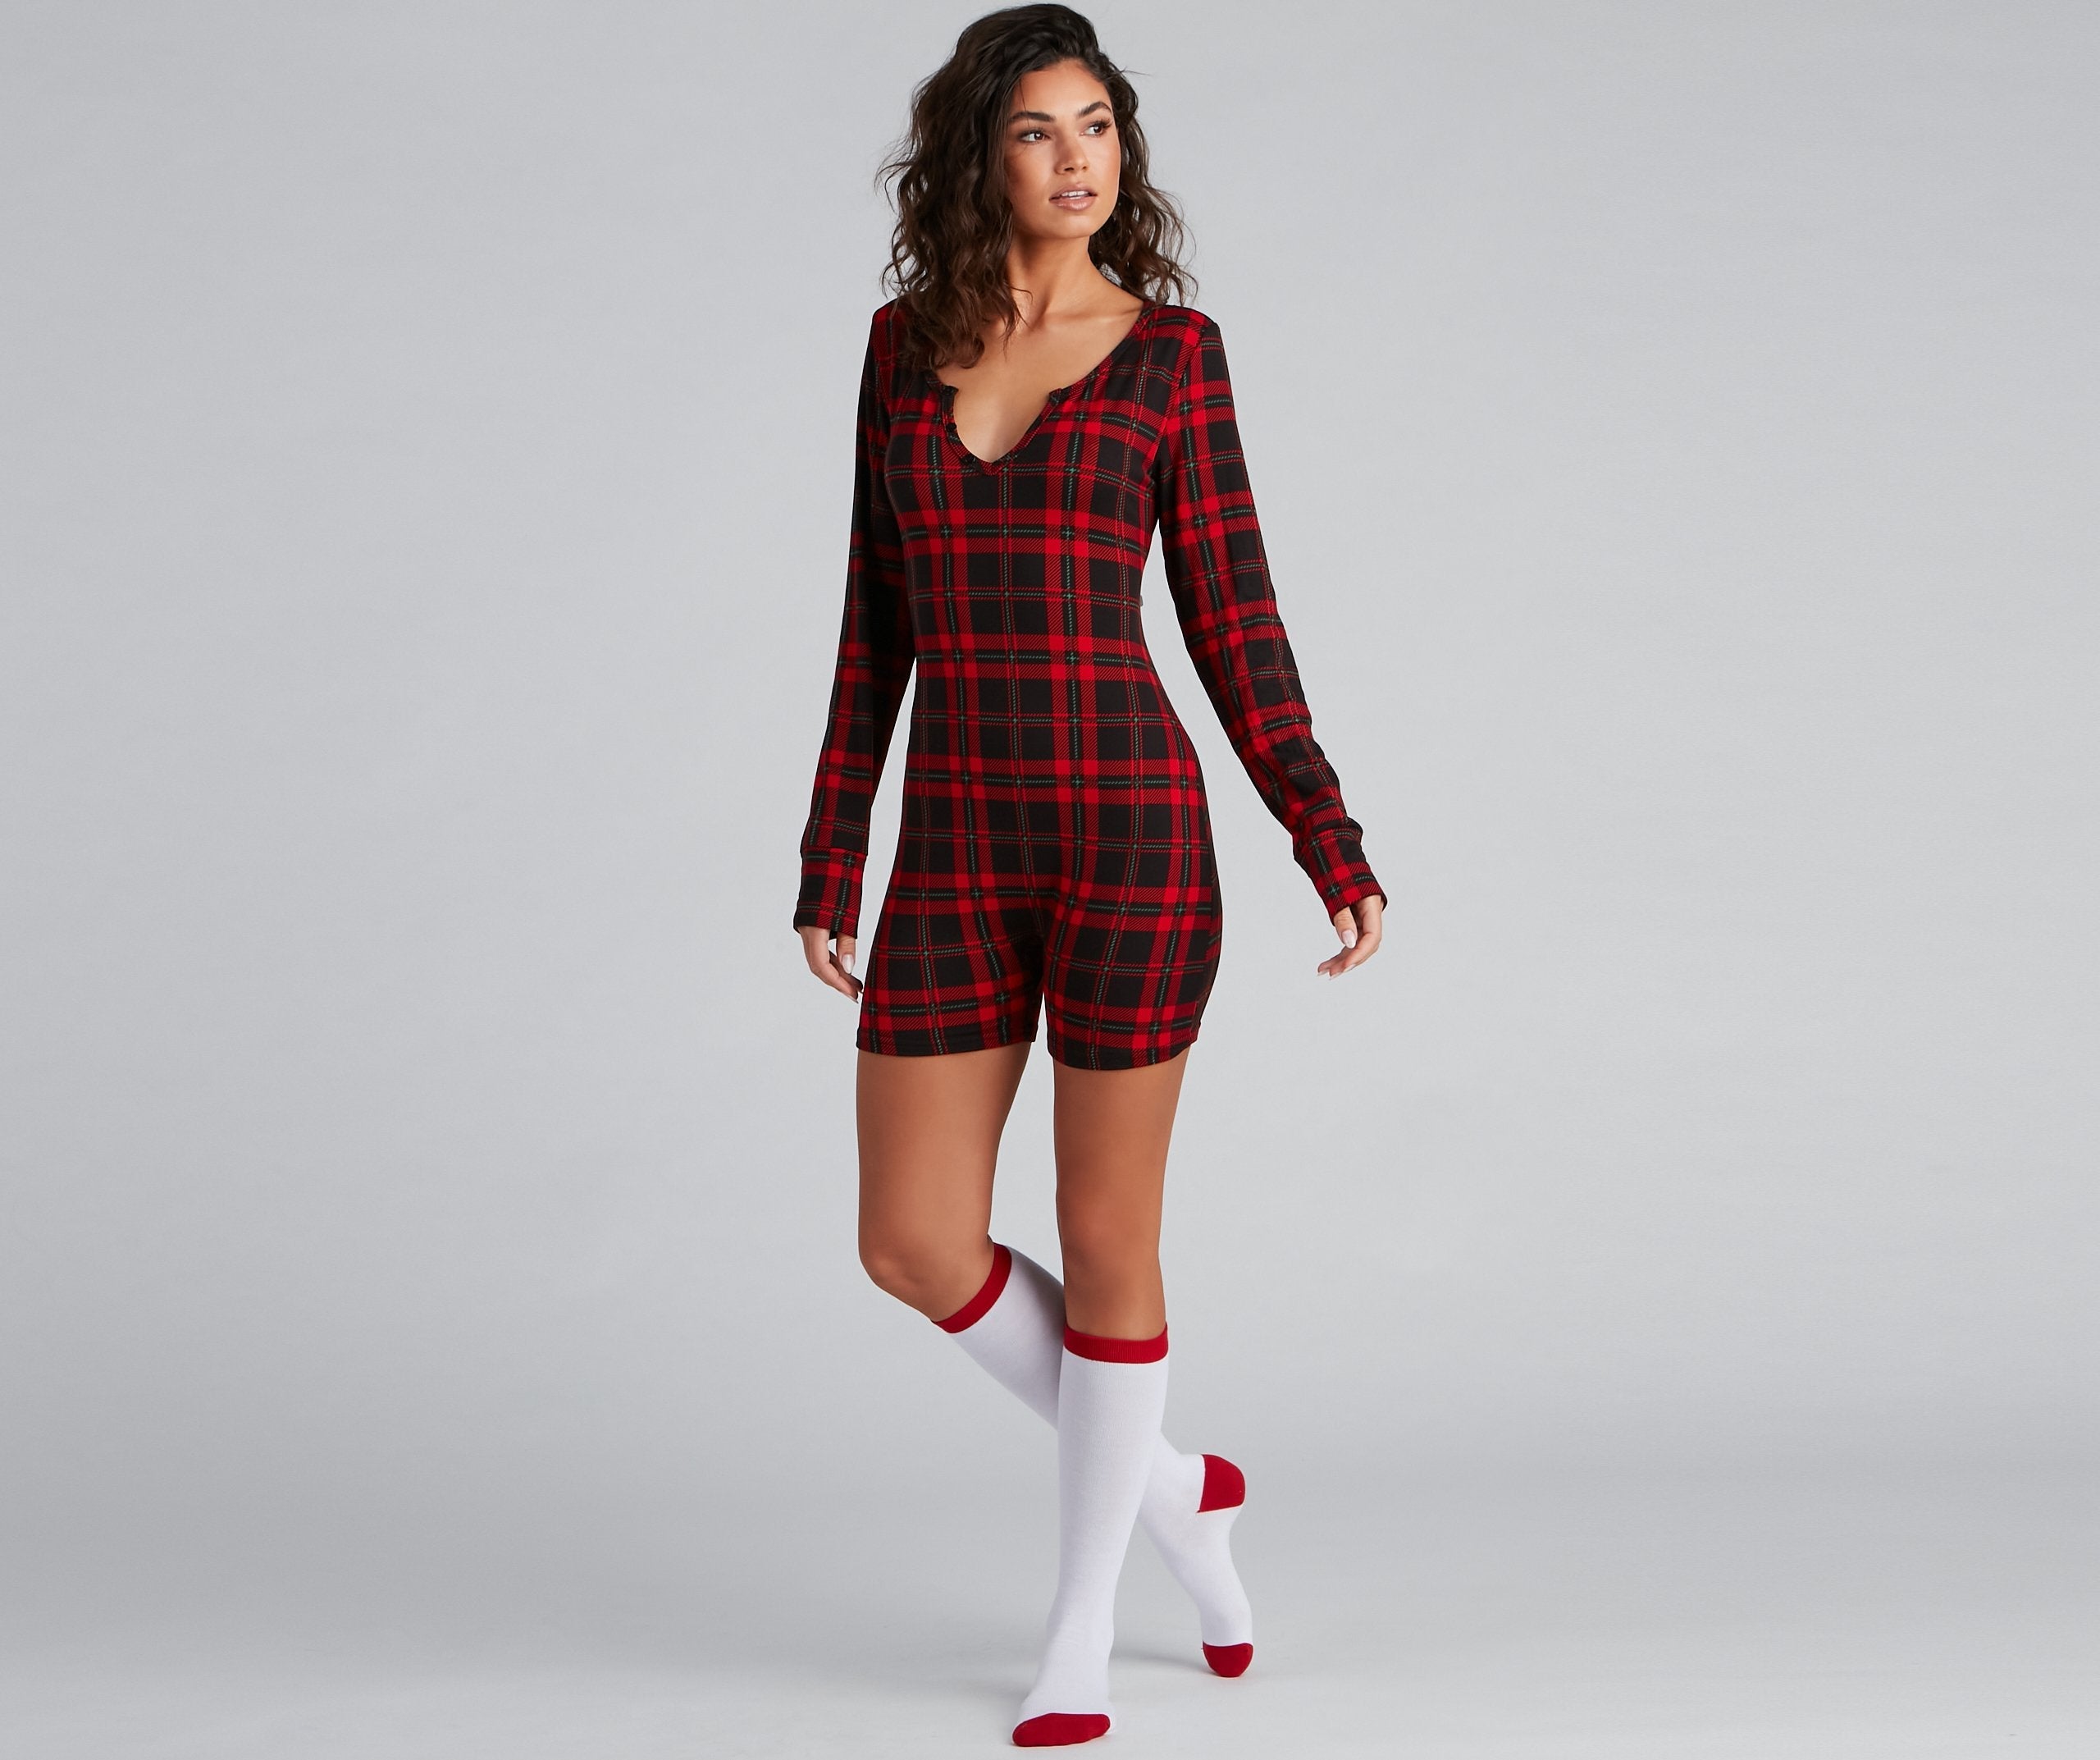 Plaid Pajama Romper And Socks Set - Lady Occasions